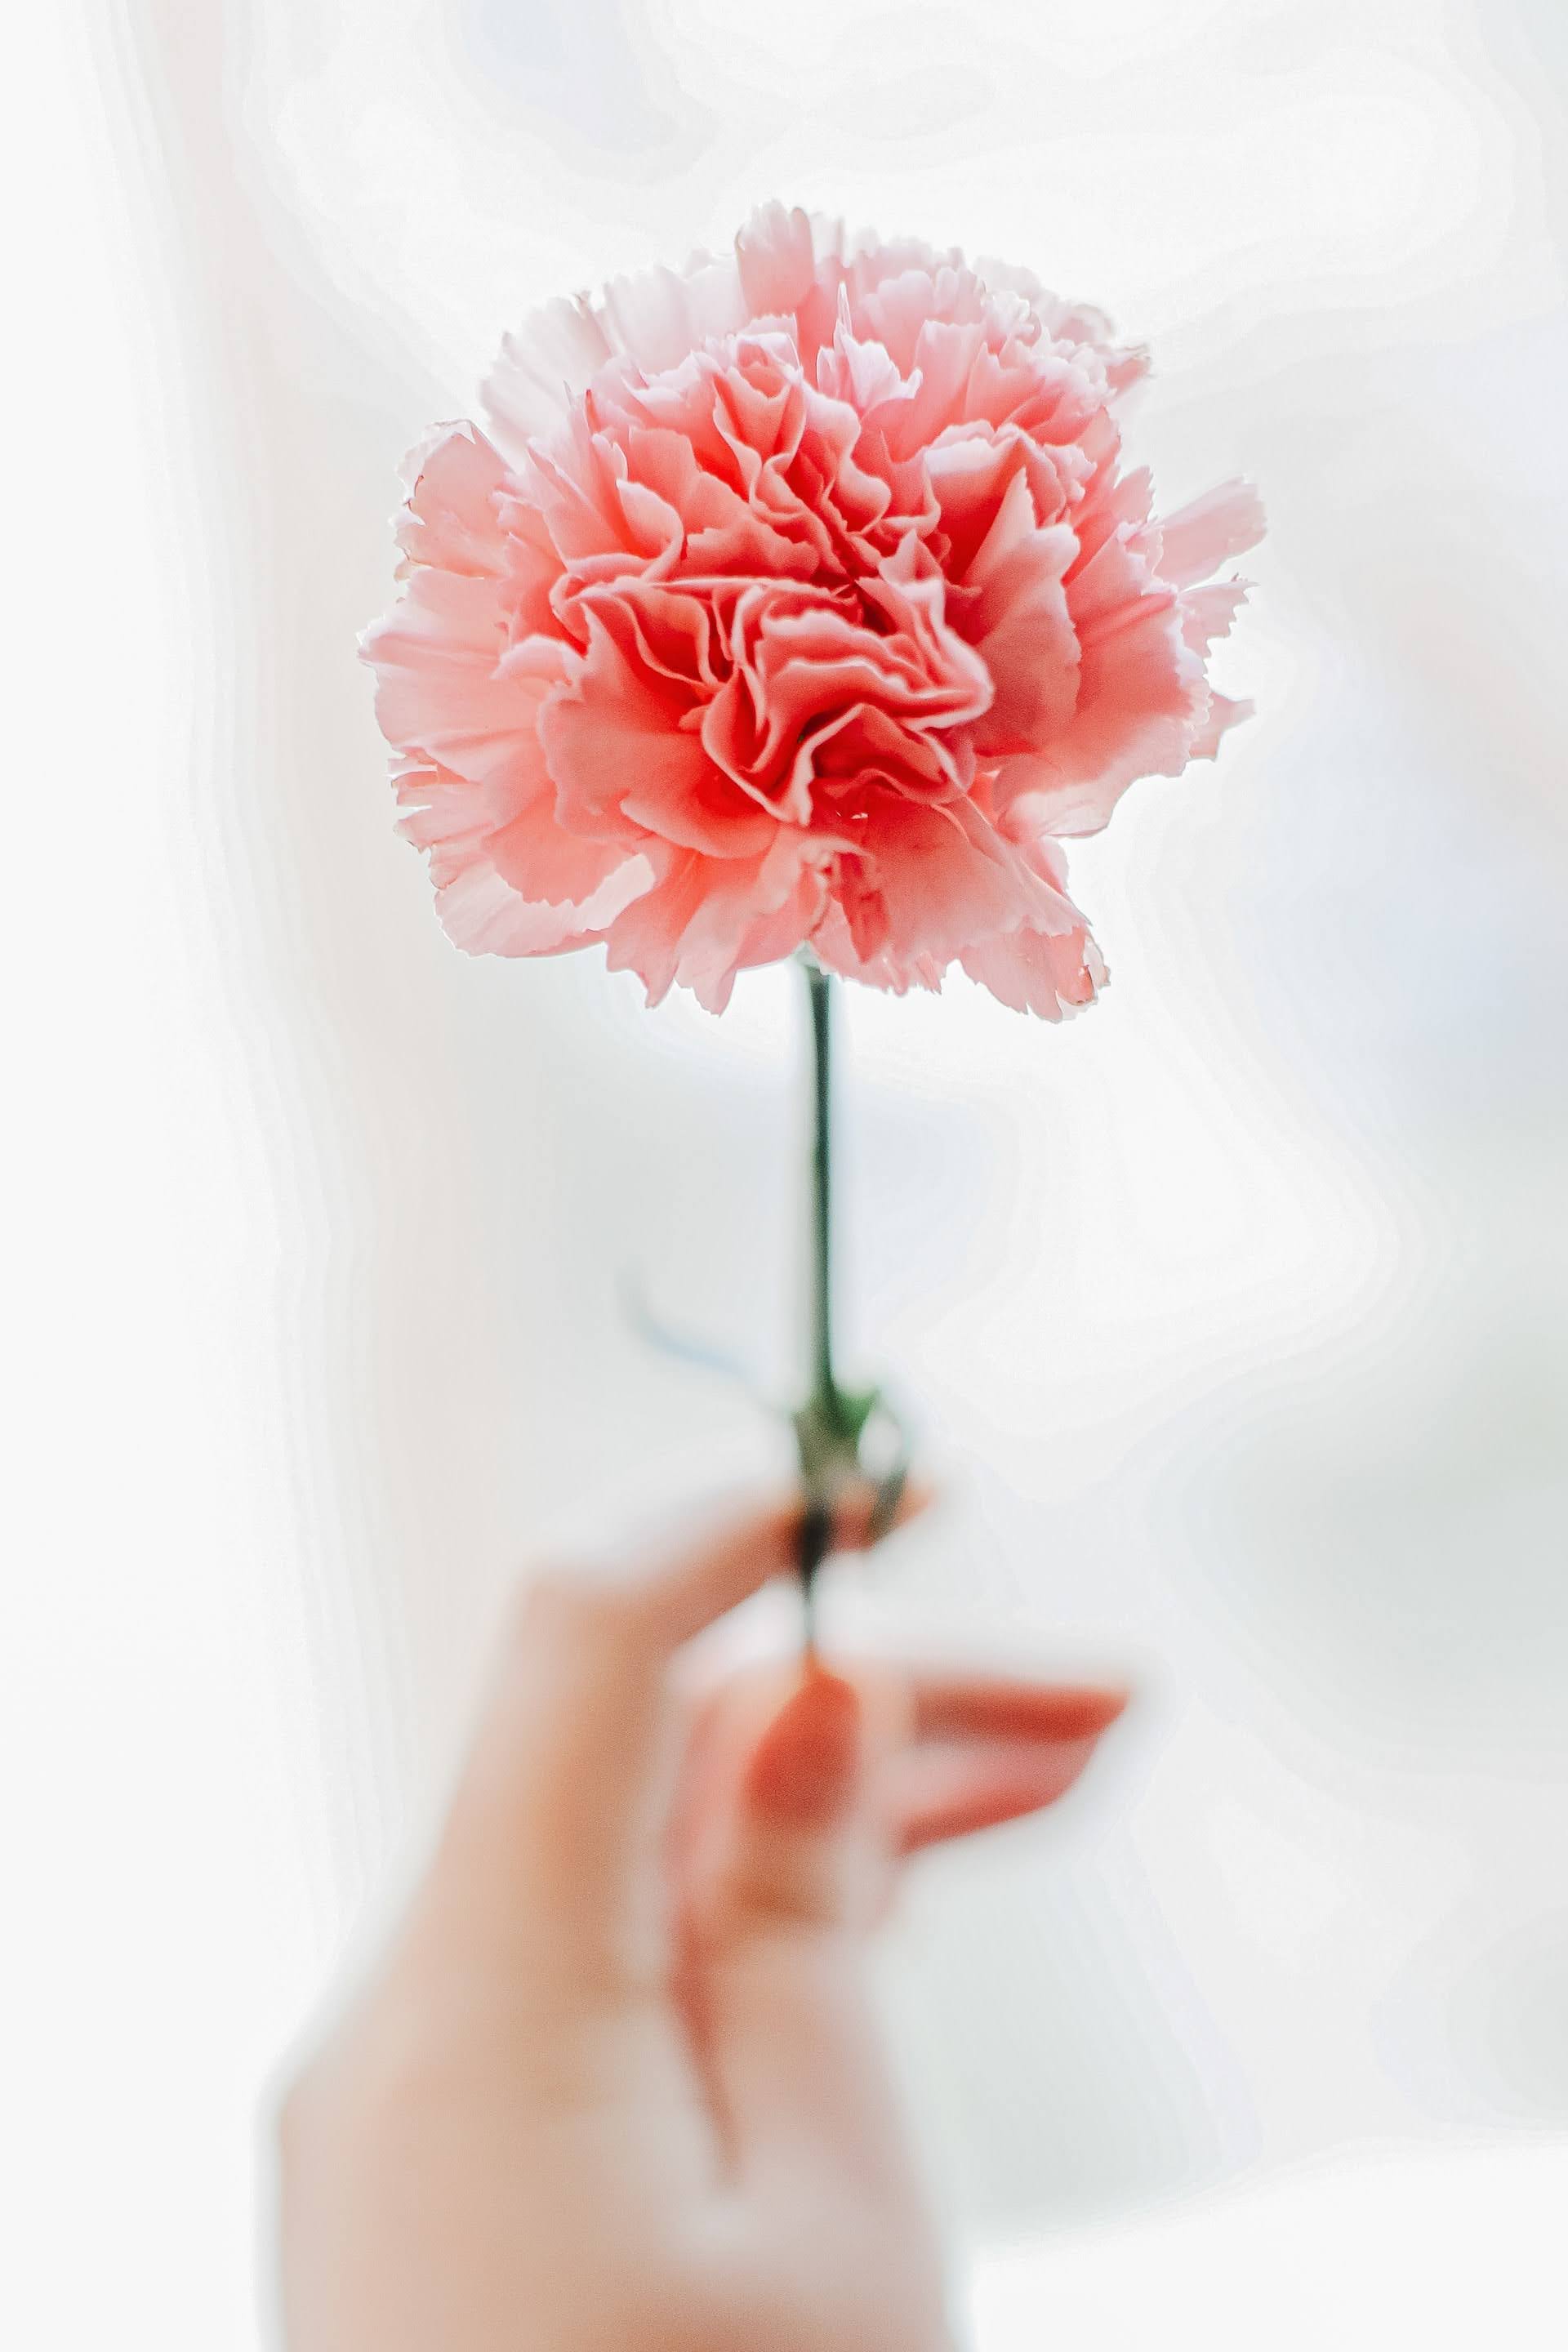 Person Holding up Pink Carnation | Photo by Assem Gniyat via Unsplash